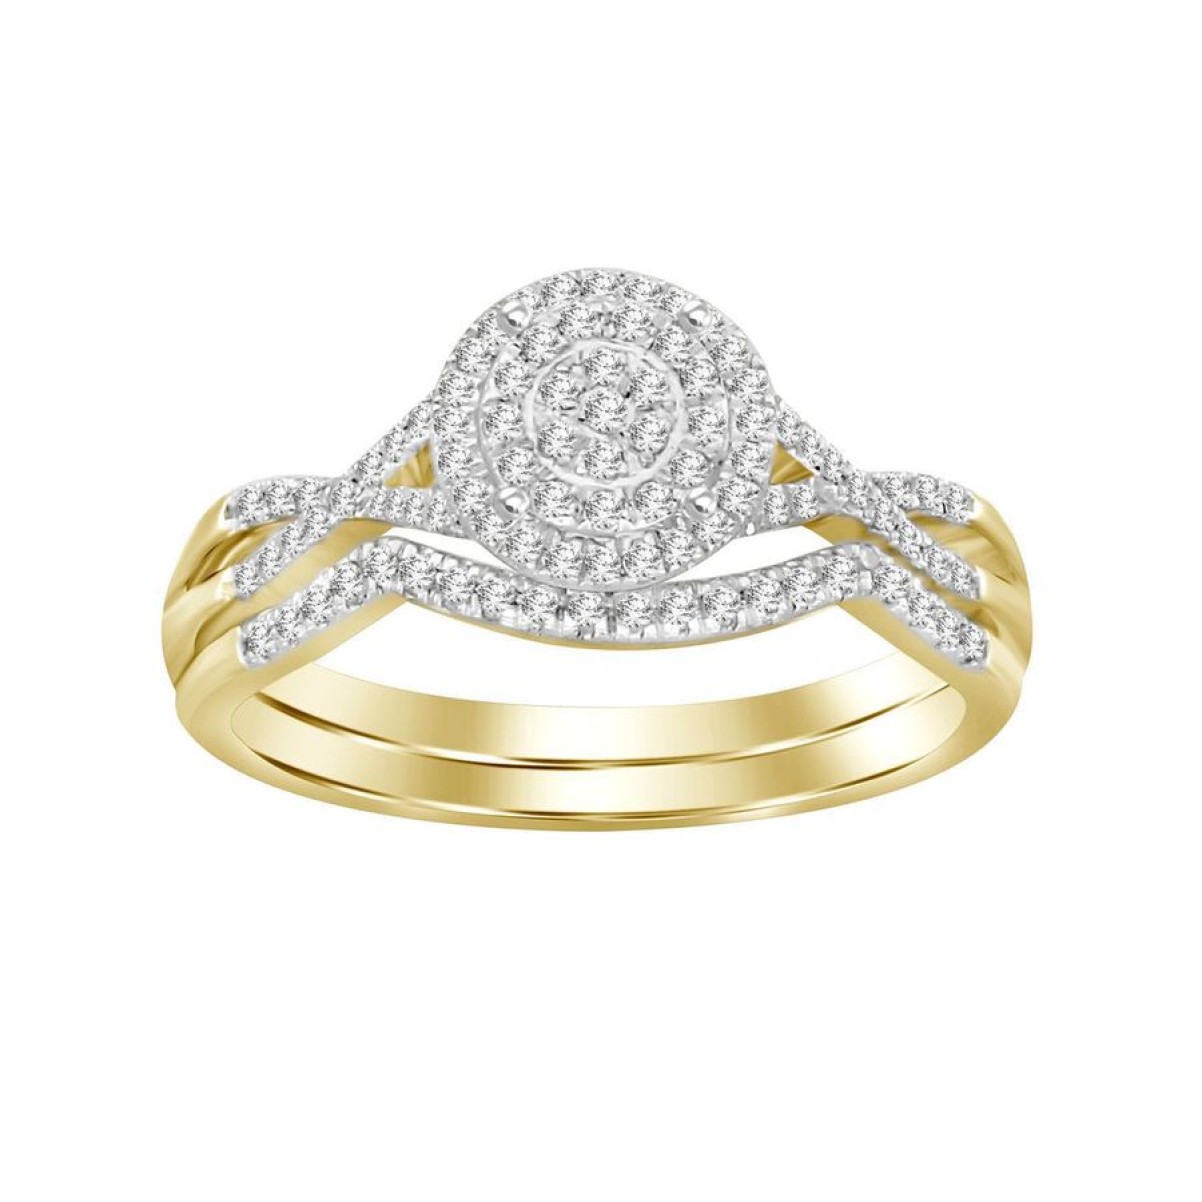 BRIDAL RING SET 0.25CT ROUND DIAMOND 10K YELLOW GOLD